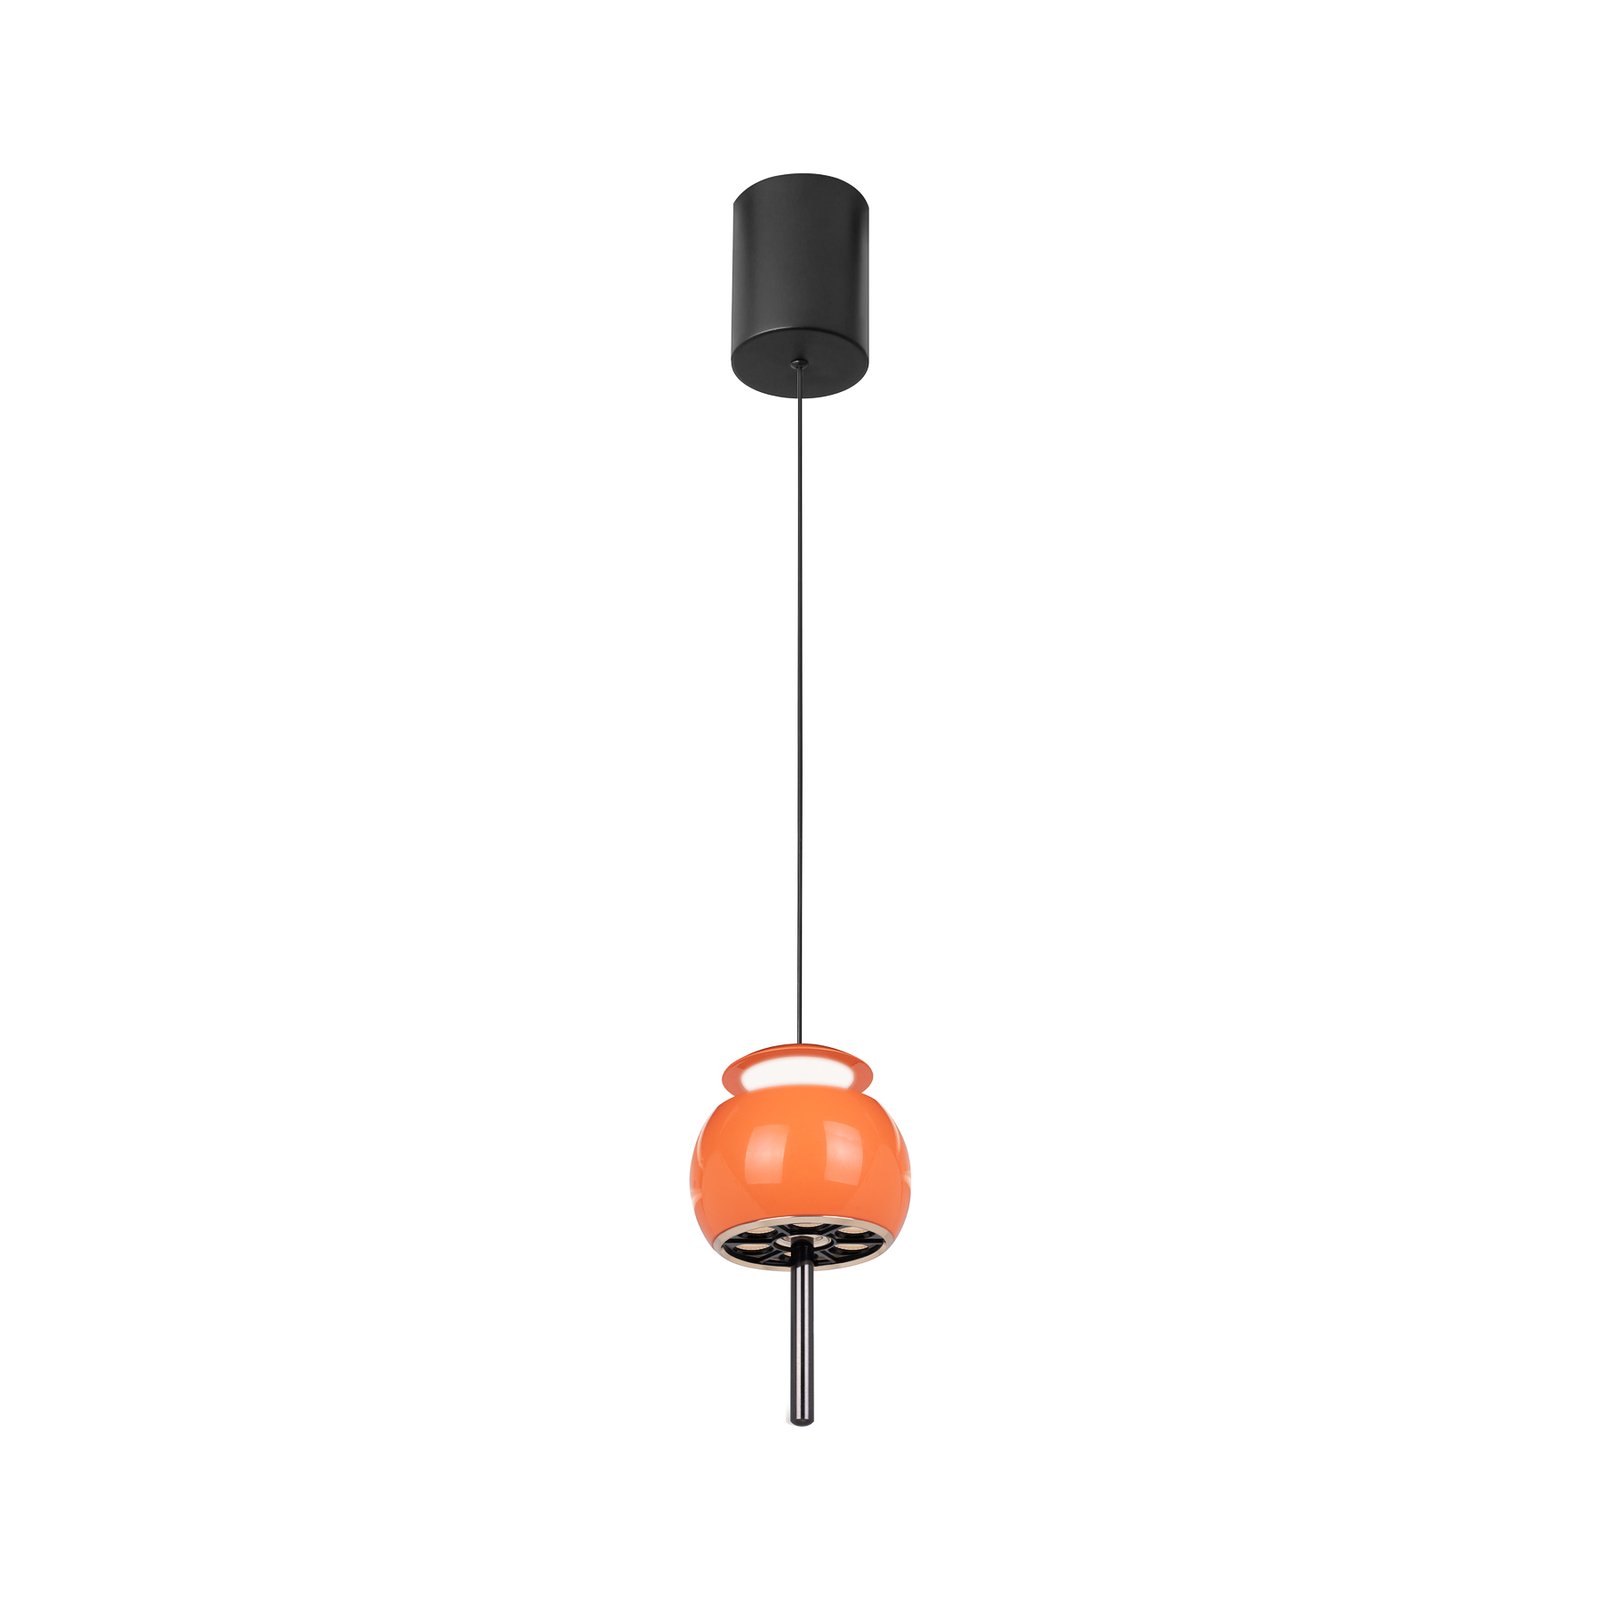 Lampada a sospensione Roller LED, arancione, regolabile in altezza, asta a